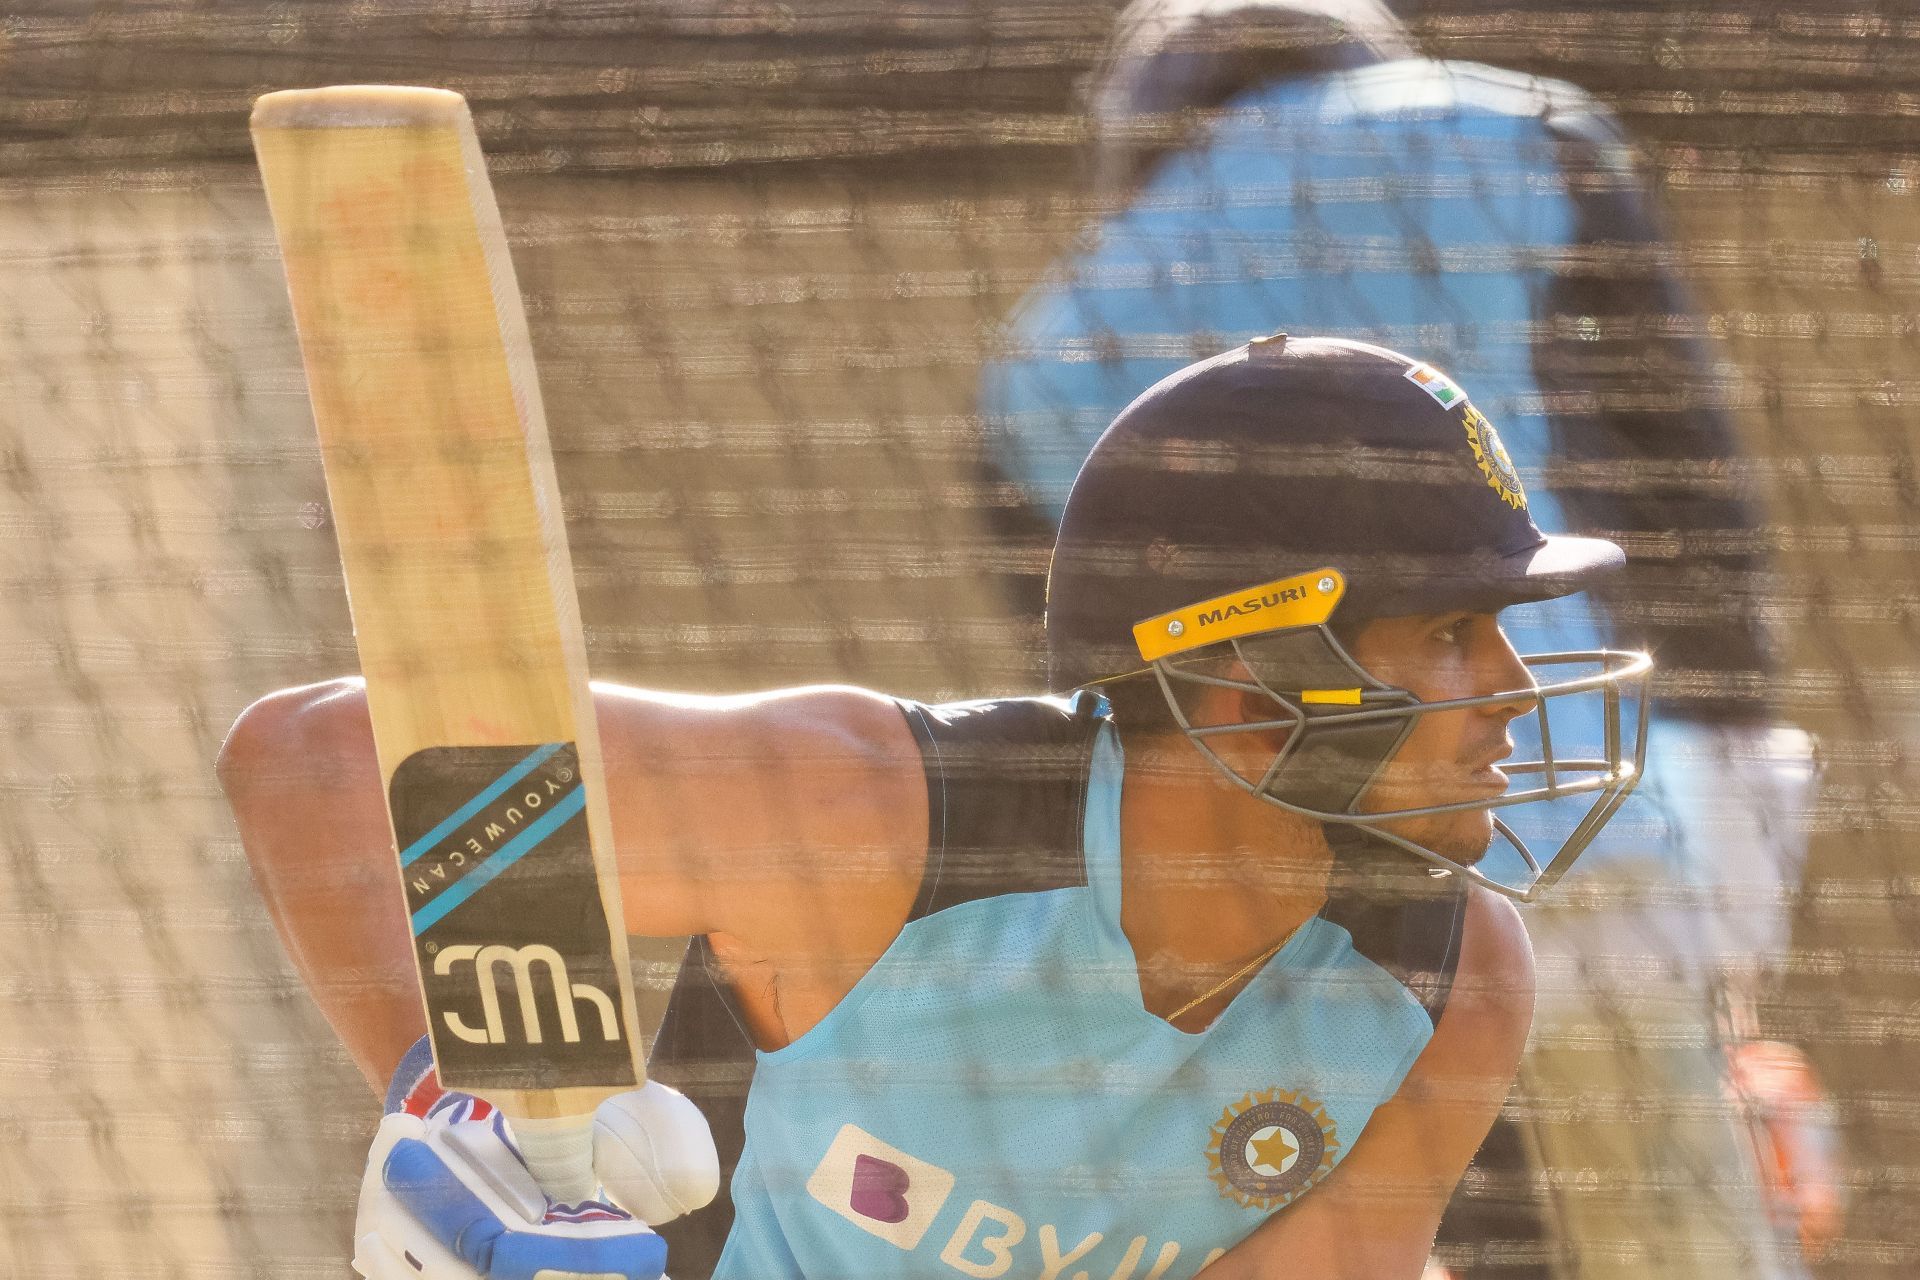 Shubman Gill scored 43 runs in 2nd ODI vs West Indies.